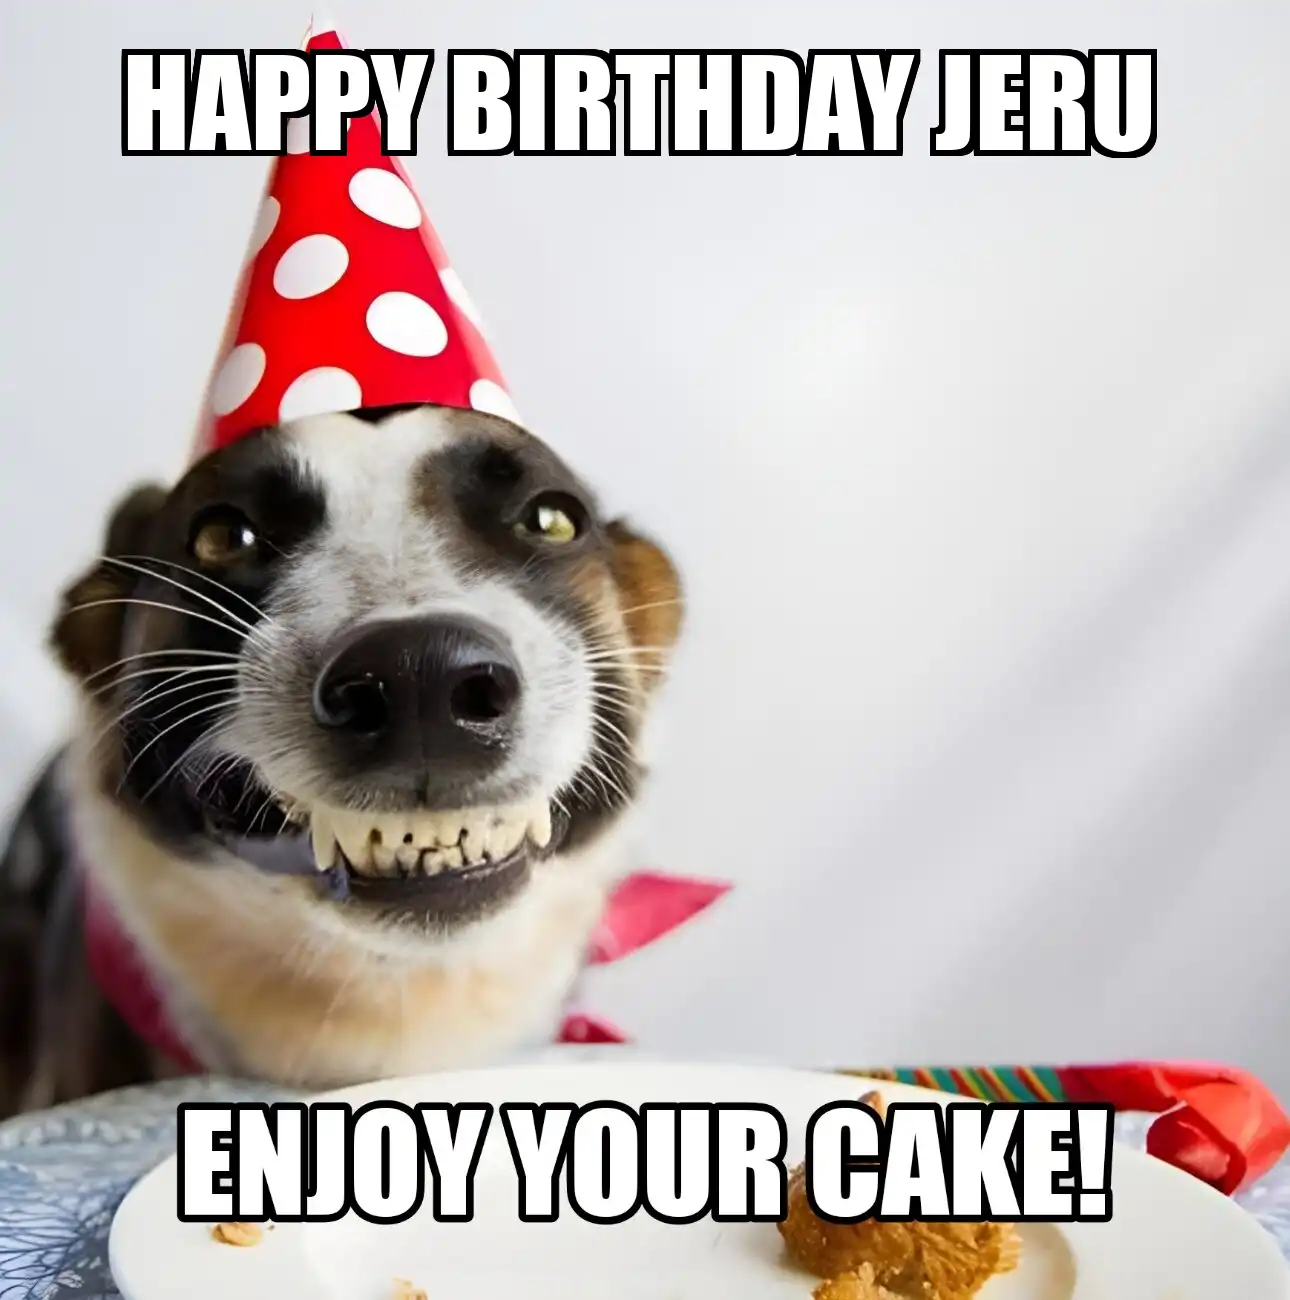 Happy Birthday Jeru Enjoy Your Cake Dog Meme